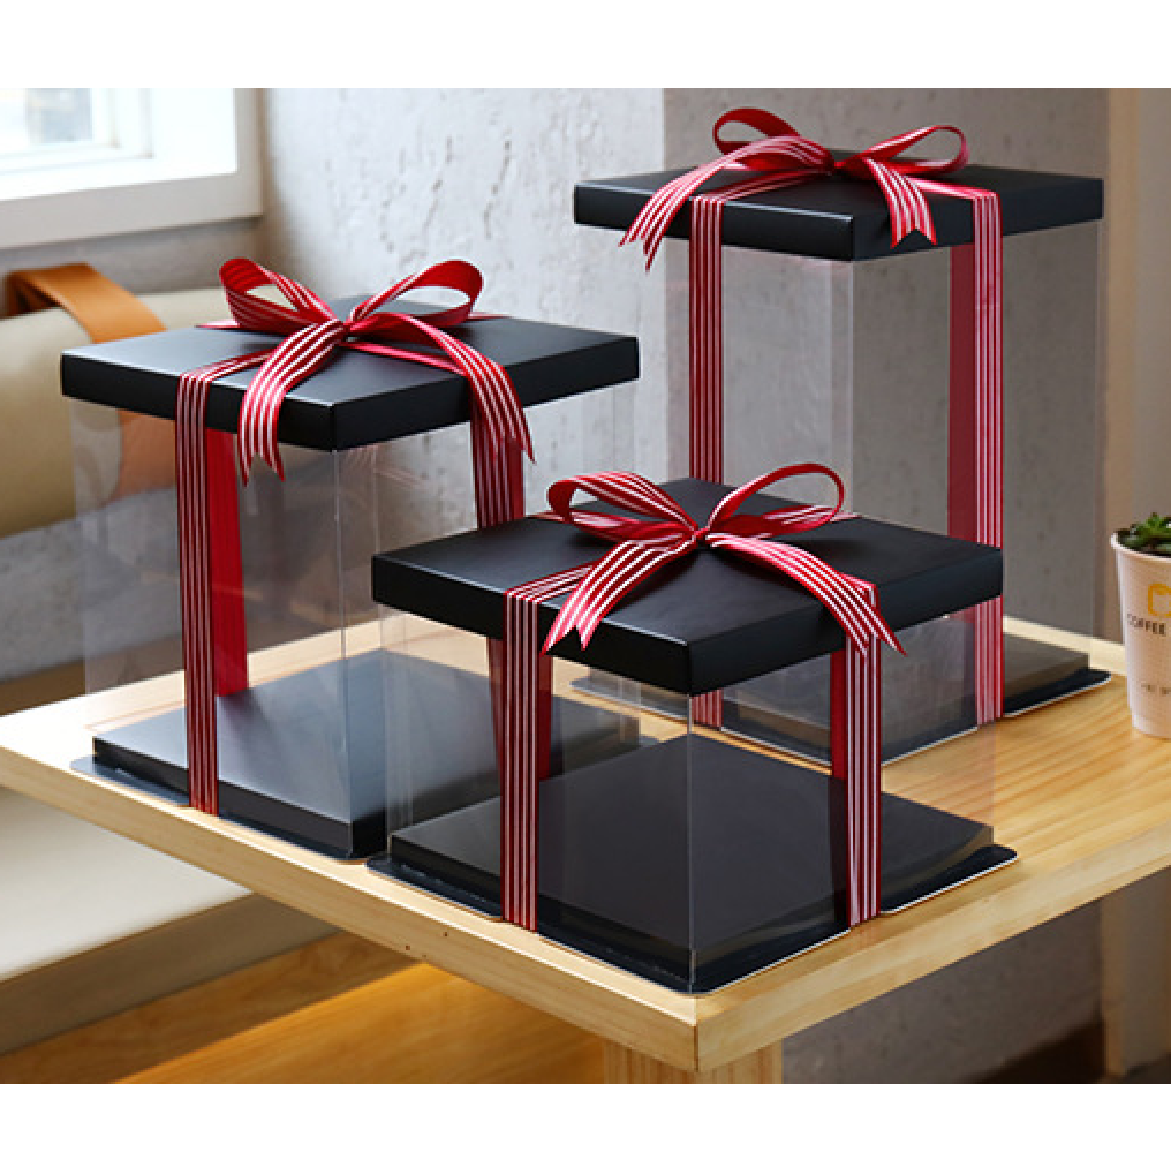 Cake Packaging - Elegant 10 Inch Cake Box Packaging 32cm Height - Black